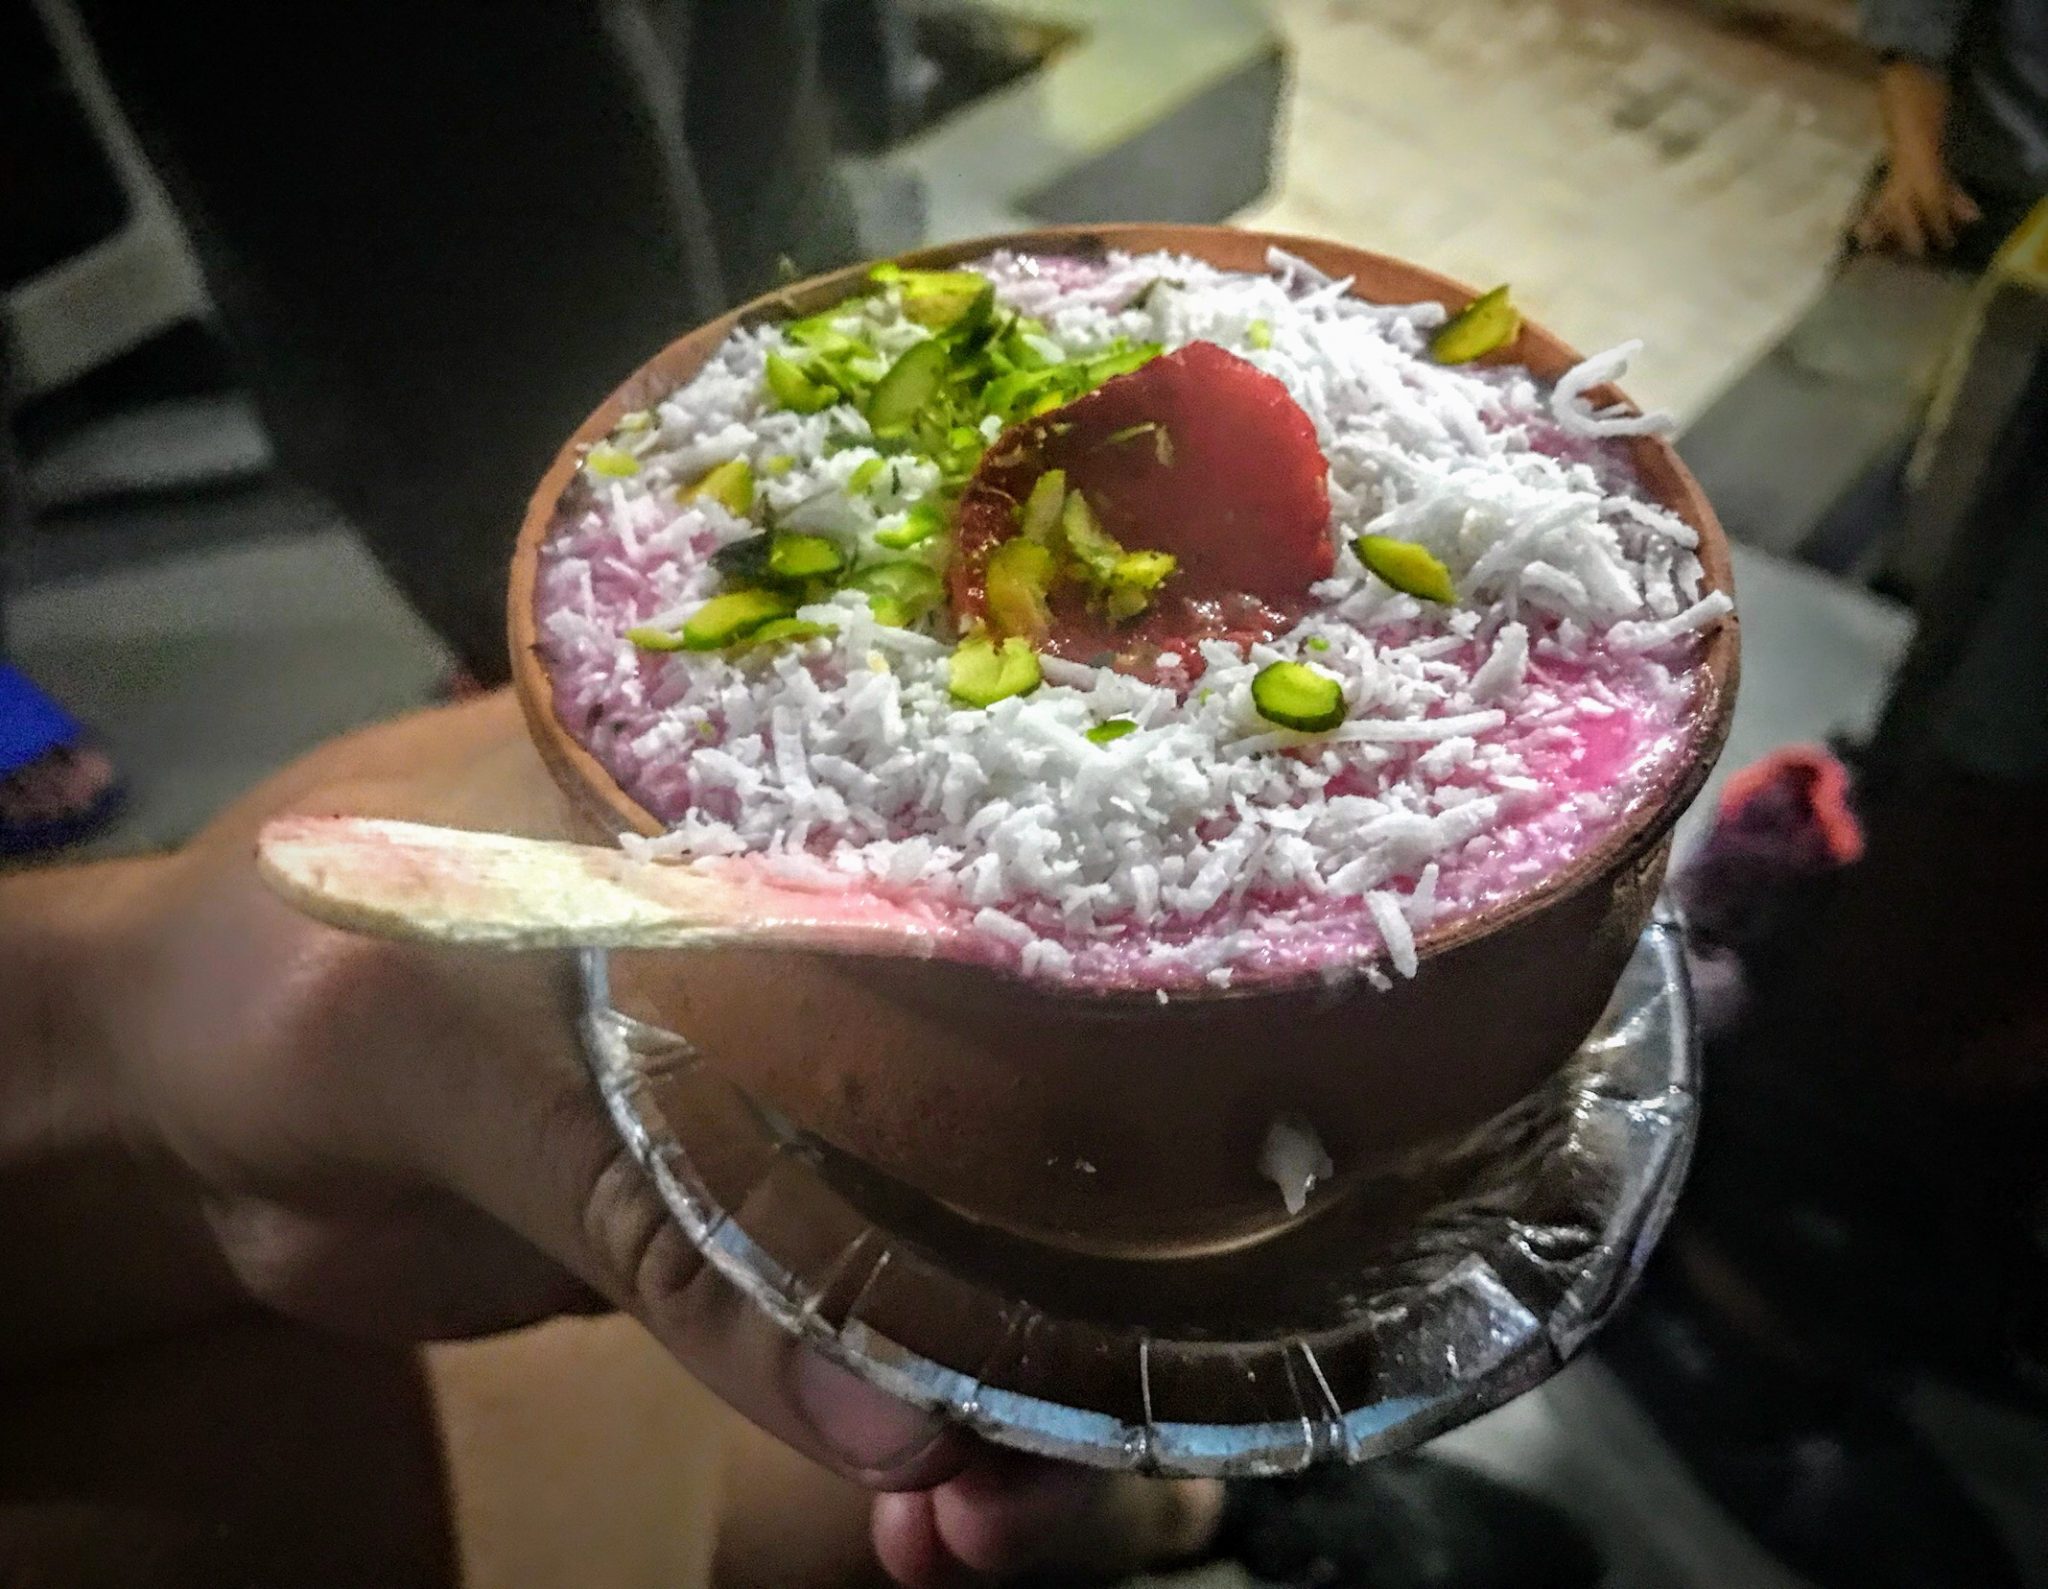 Strawberry and coconut lassi at the Blue Lassi shop in Varanasi